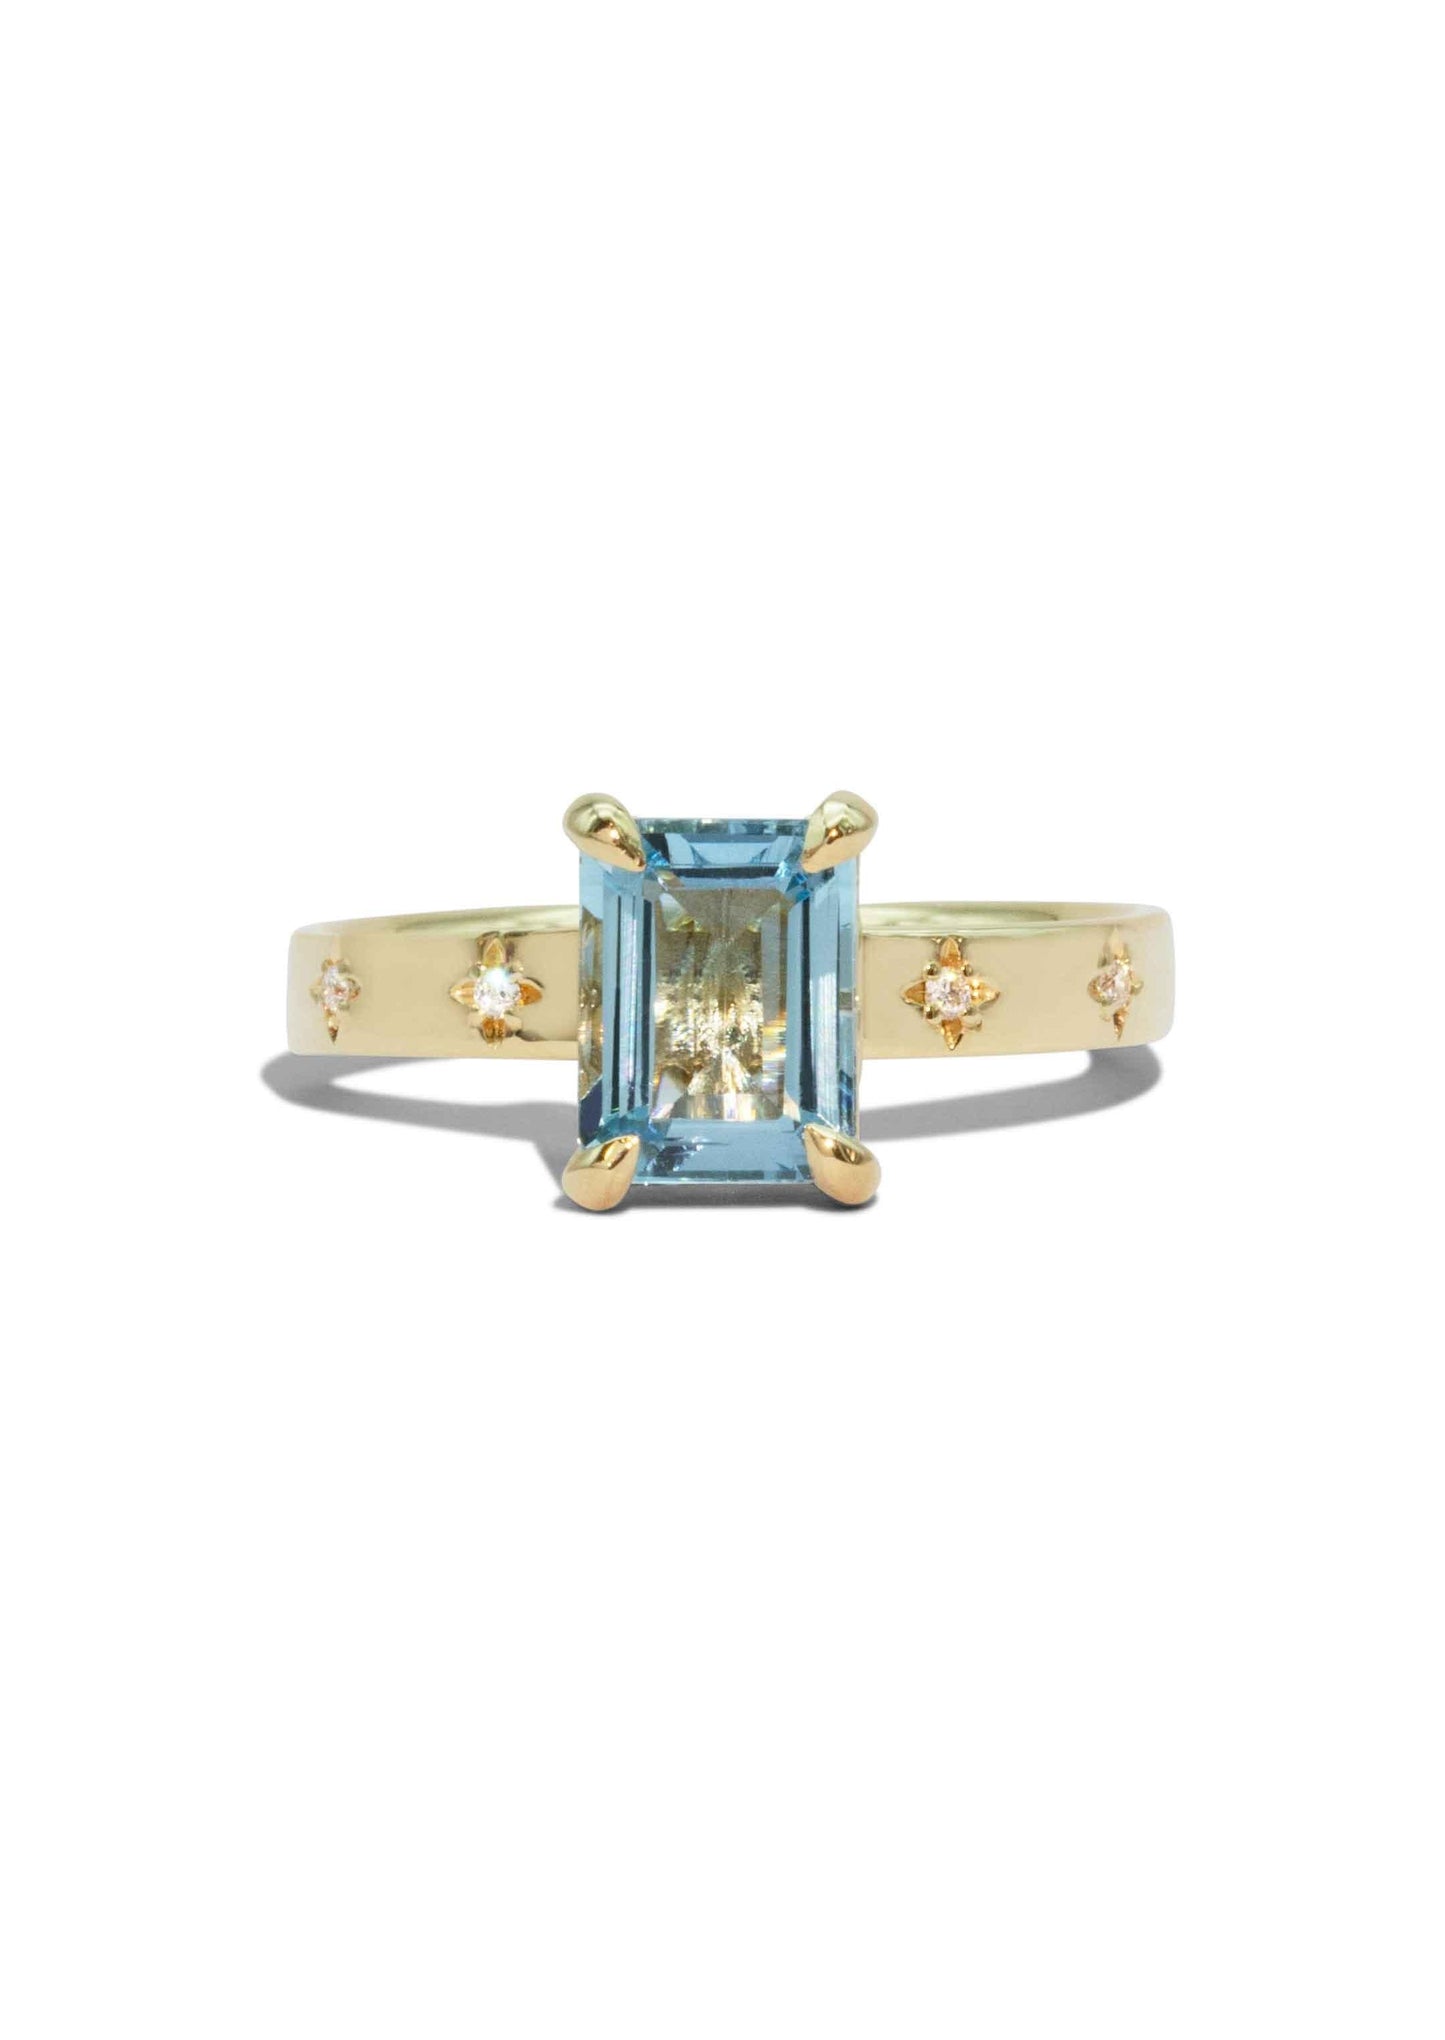 The Stella 1.43ct Aquamarine Ring